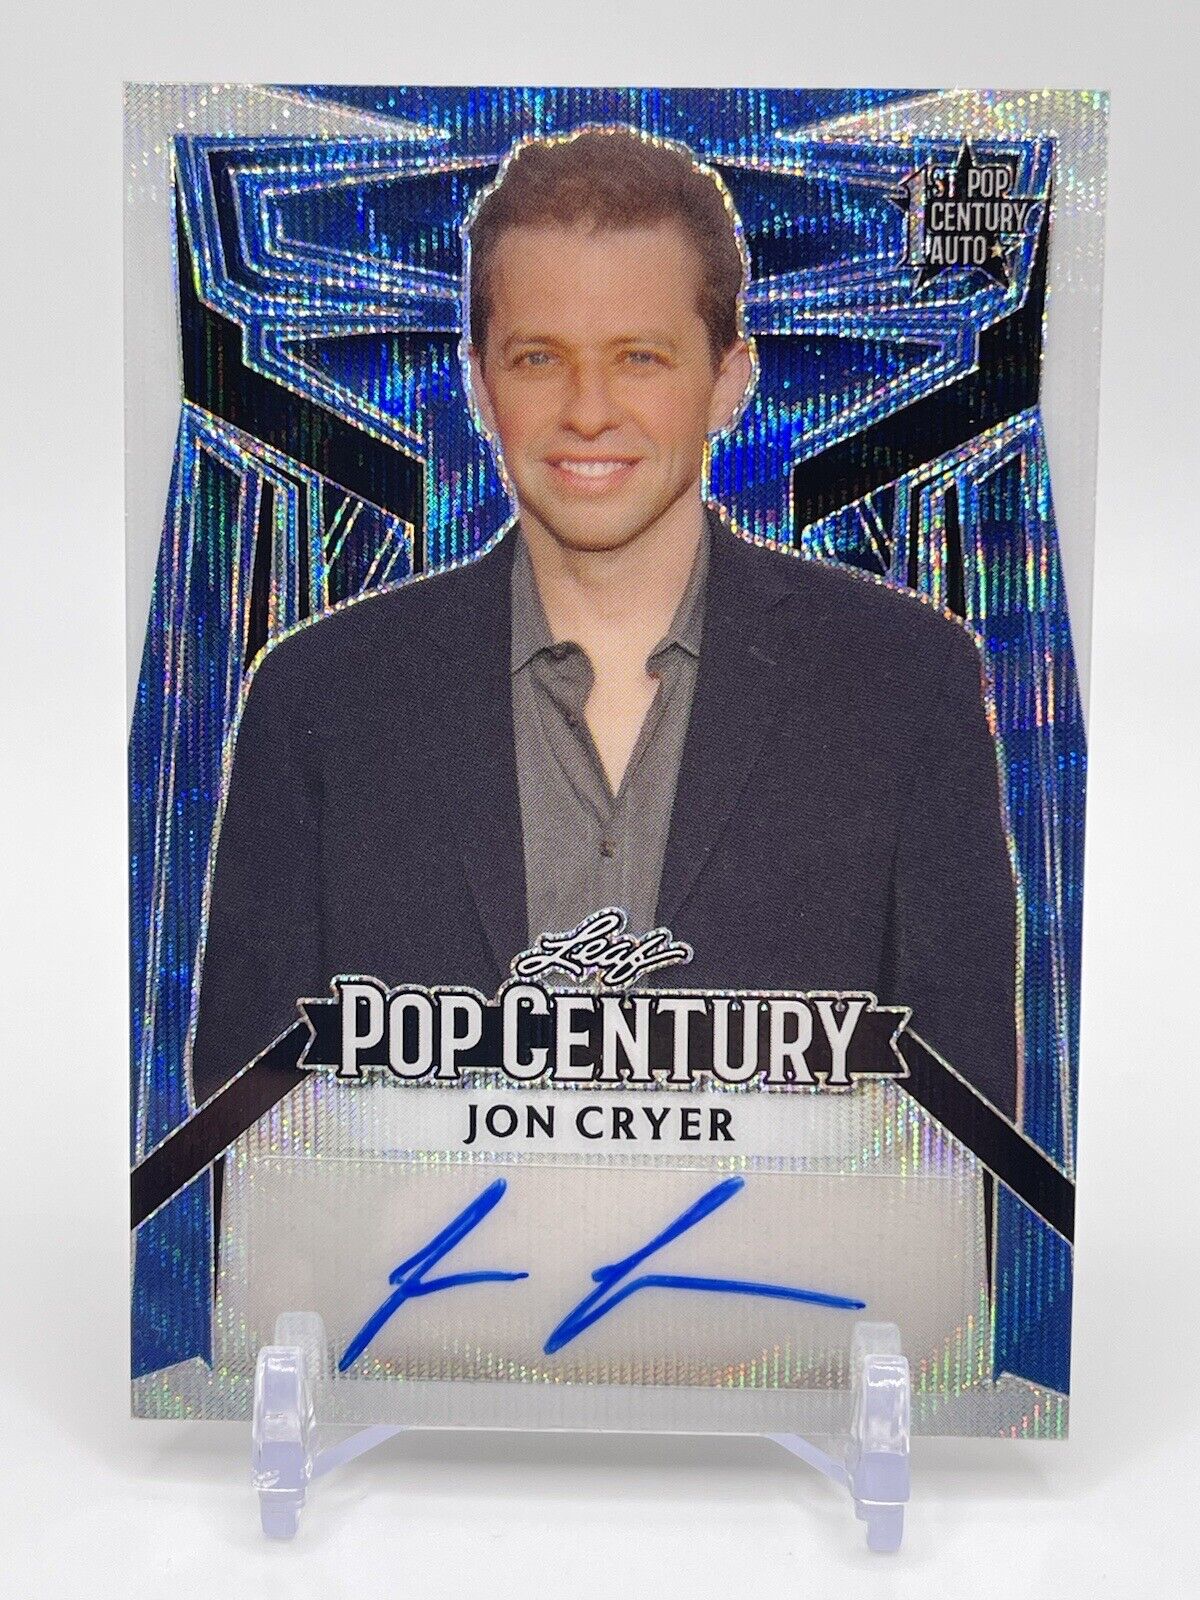 2023 Leaf Pop Century Jon Cryer Auto /7 1st Pop Century Auto Two And A Half Men